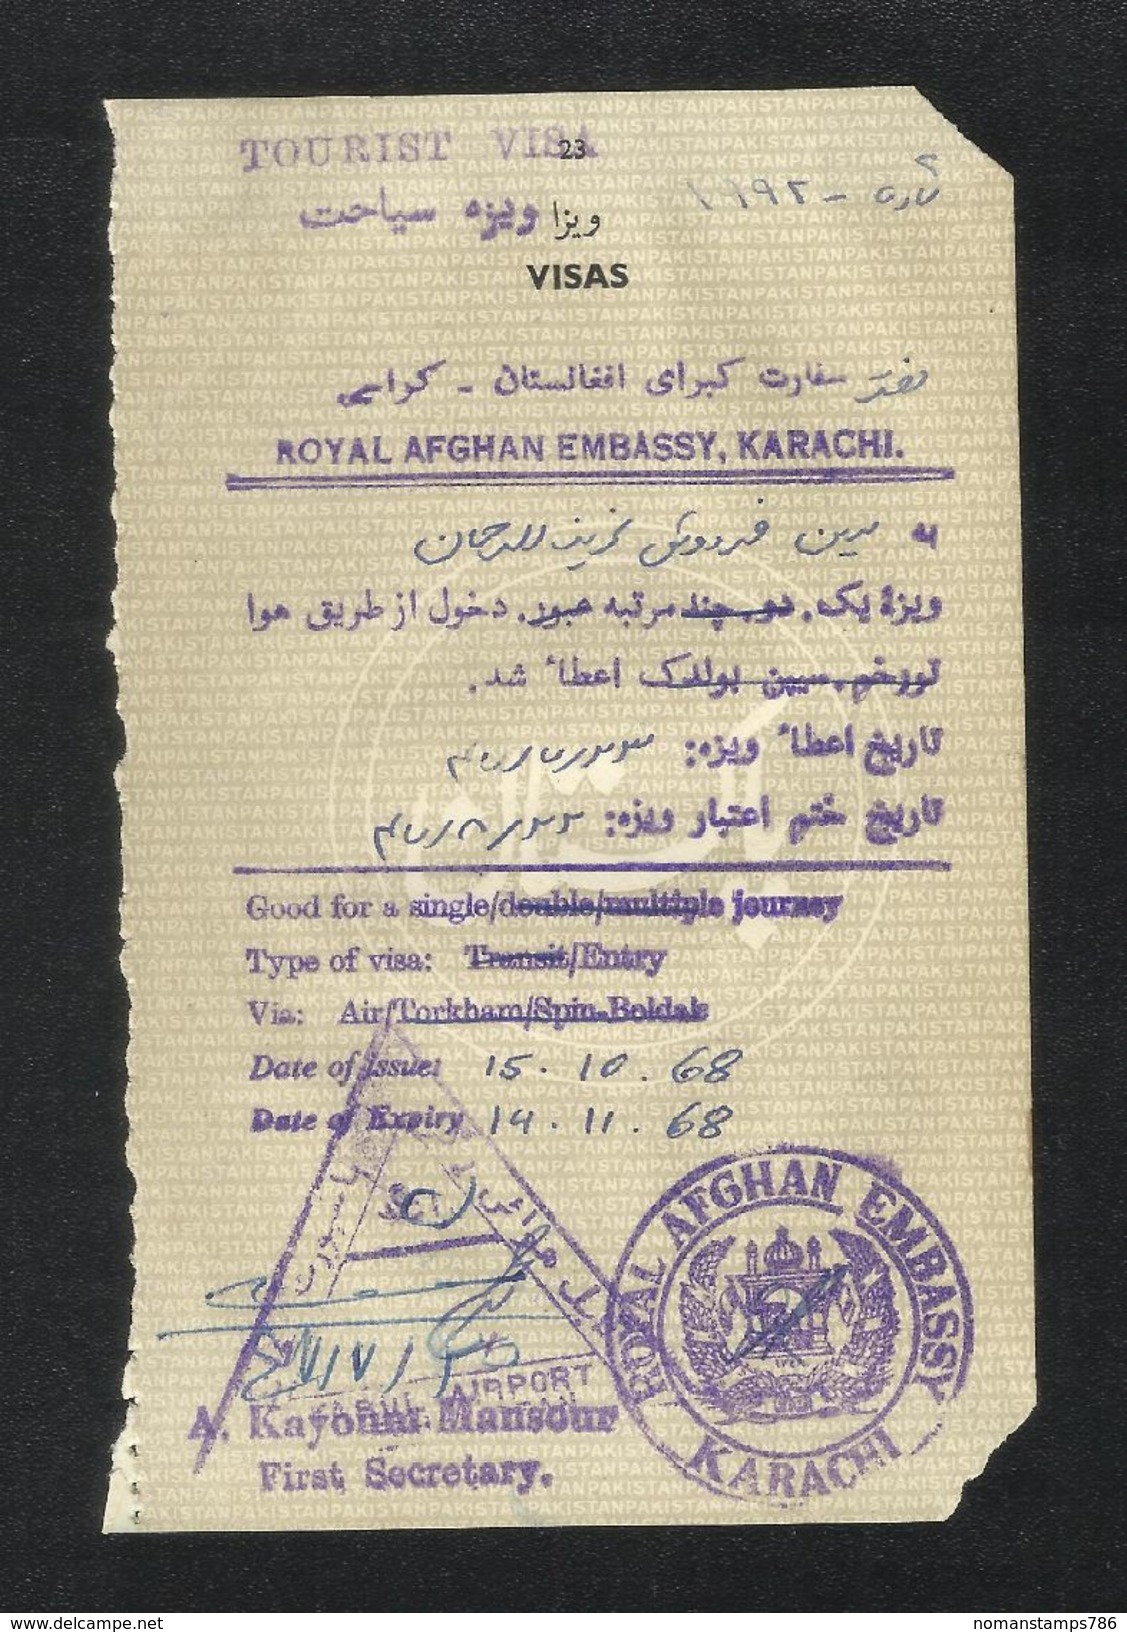 Lebanon Liban 500 P Revenue Stamps On Used Passport Visas Page 1971 - Liban